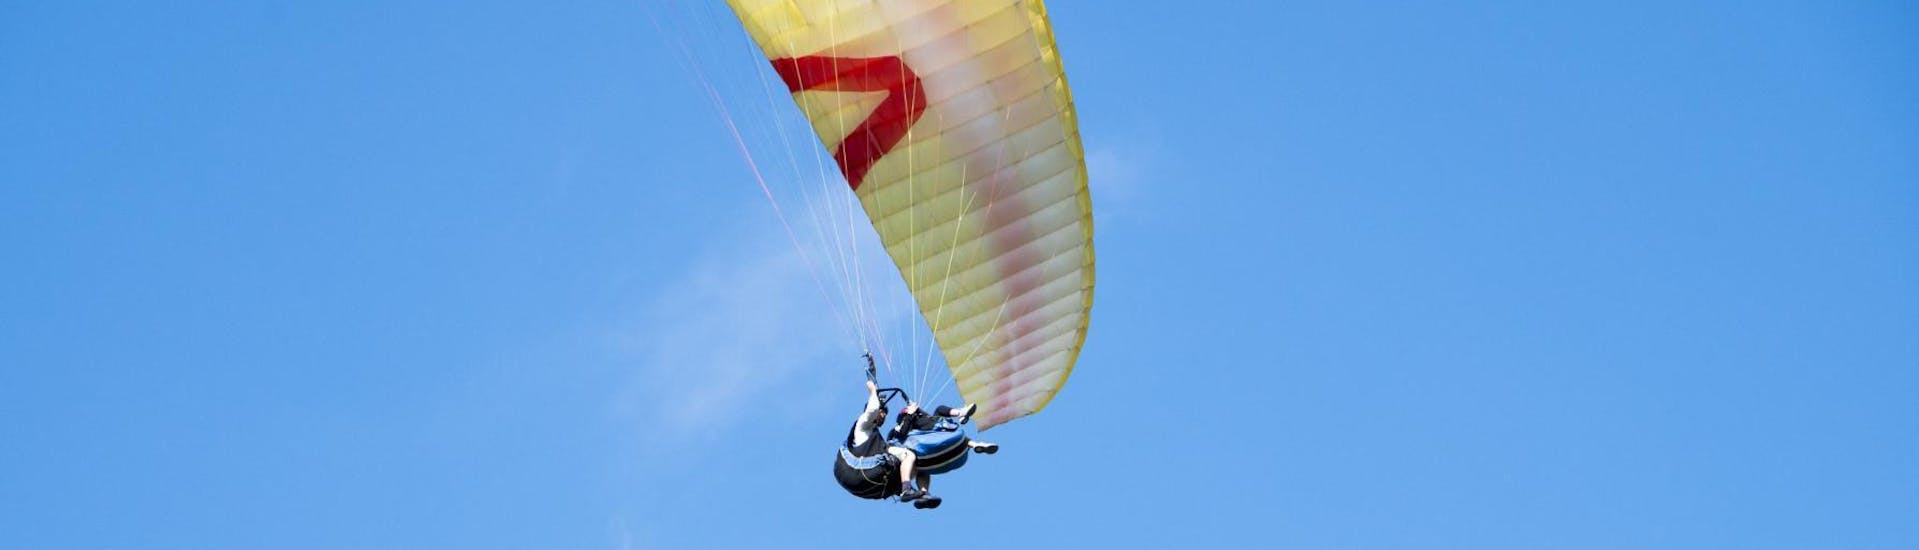 tandem-paragliding-on-the-dalmatian-coast-sky-riders-paragliding-croatia-hero